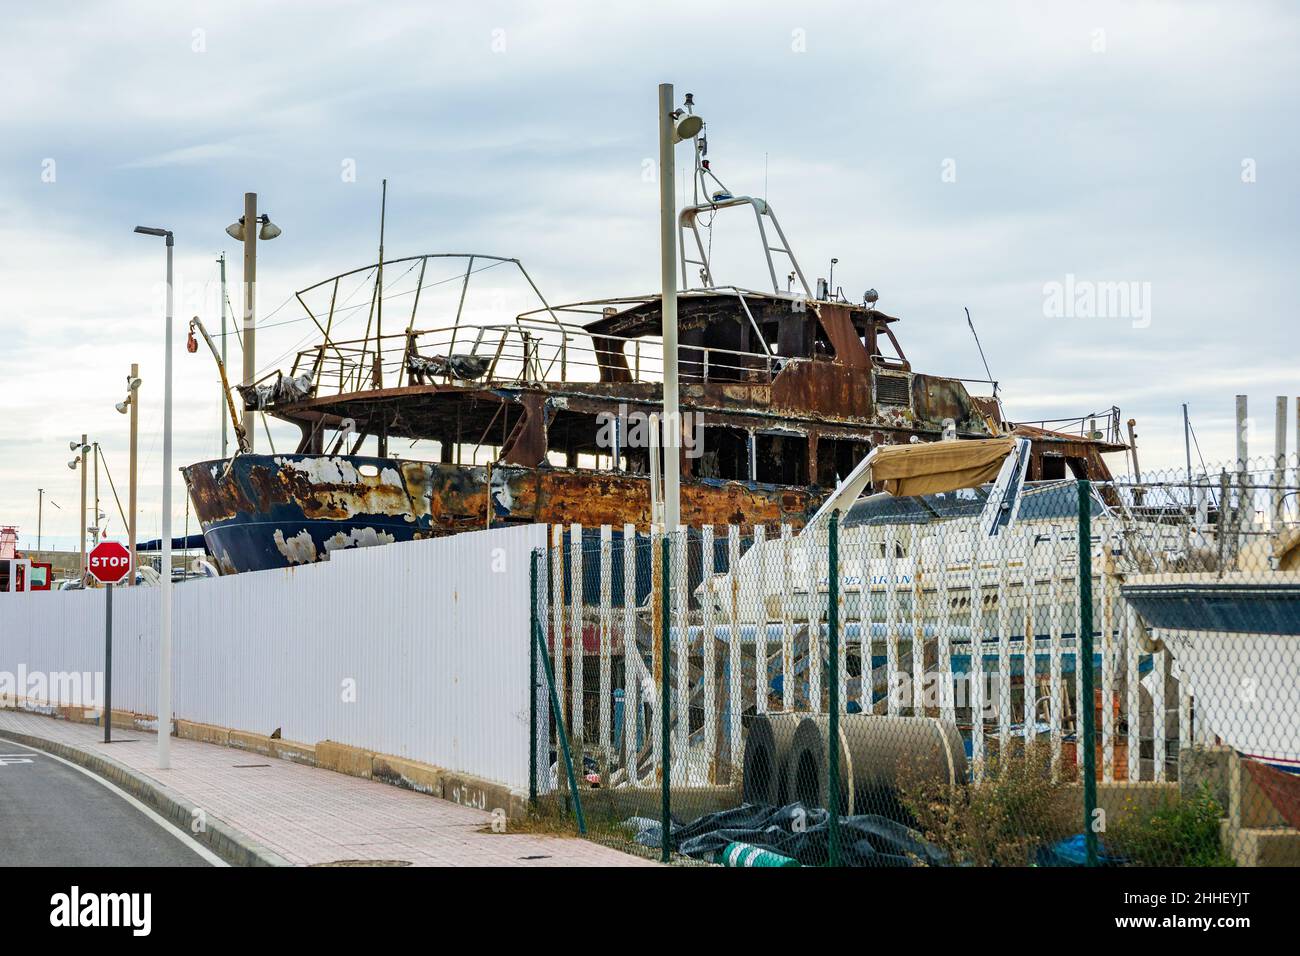 Fire Damaged, Burnt Out Boat at Garrucha Shipyard, Spain Stock Photo